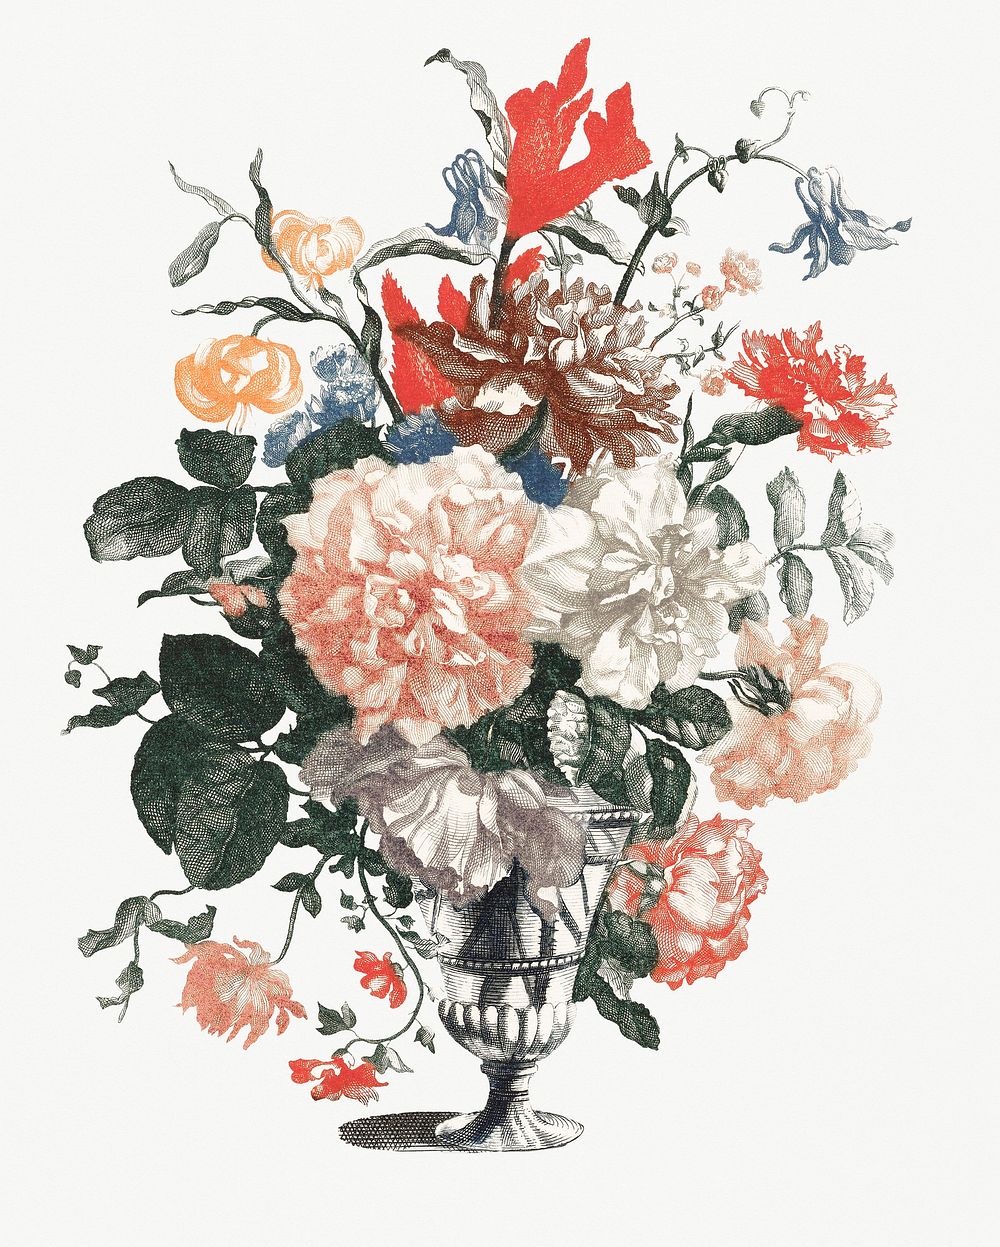 Flowers in a glass vase (1688-1698) by Johan Teyler (1648-1709). Original from Rijks Museum. Digitally enhanced by rawpixel.